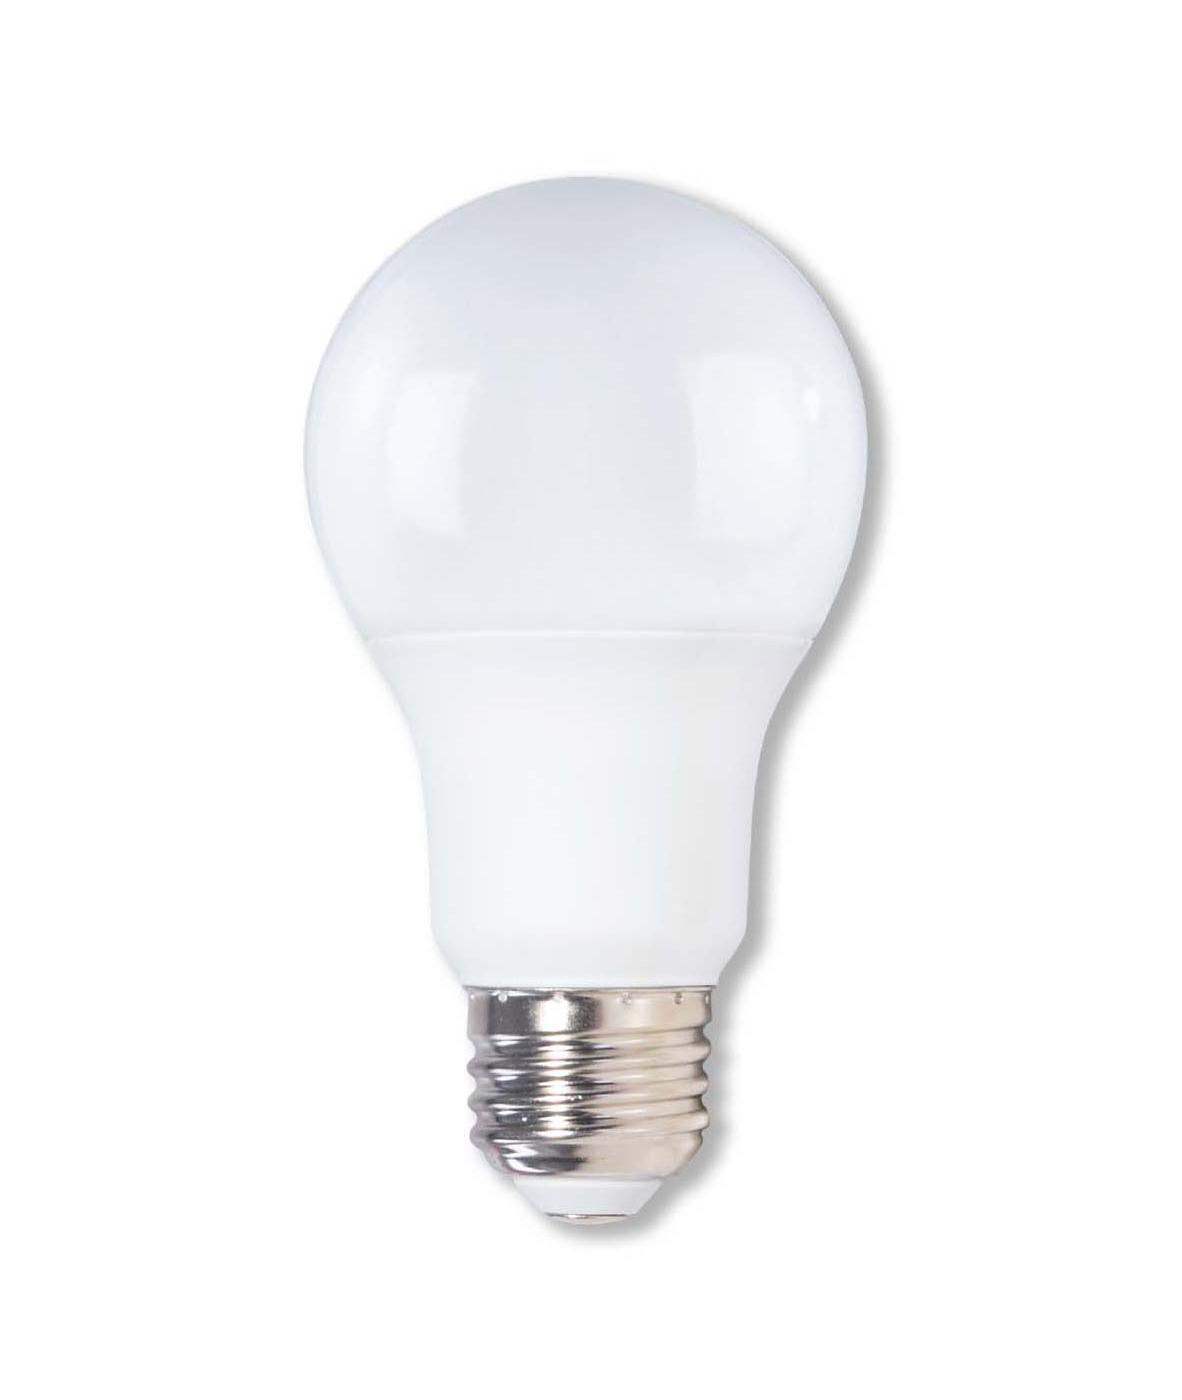 H-E-B Double Life A19 75-Watt LED Light Bulbs - Soft White; image 2 of 2